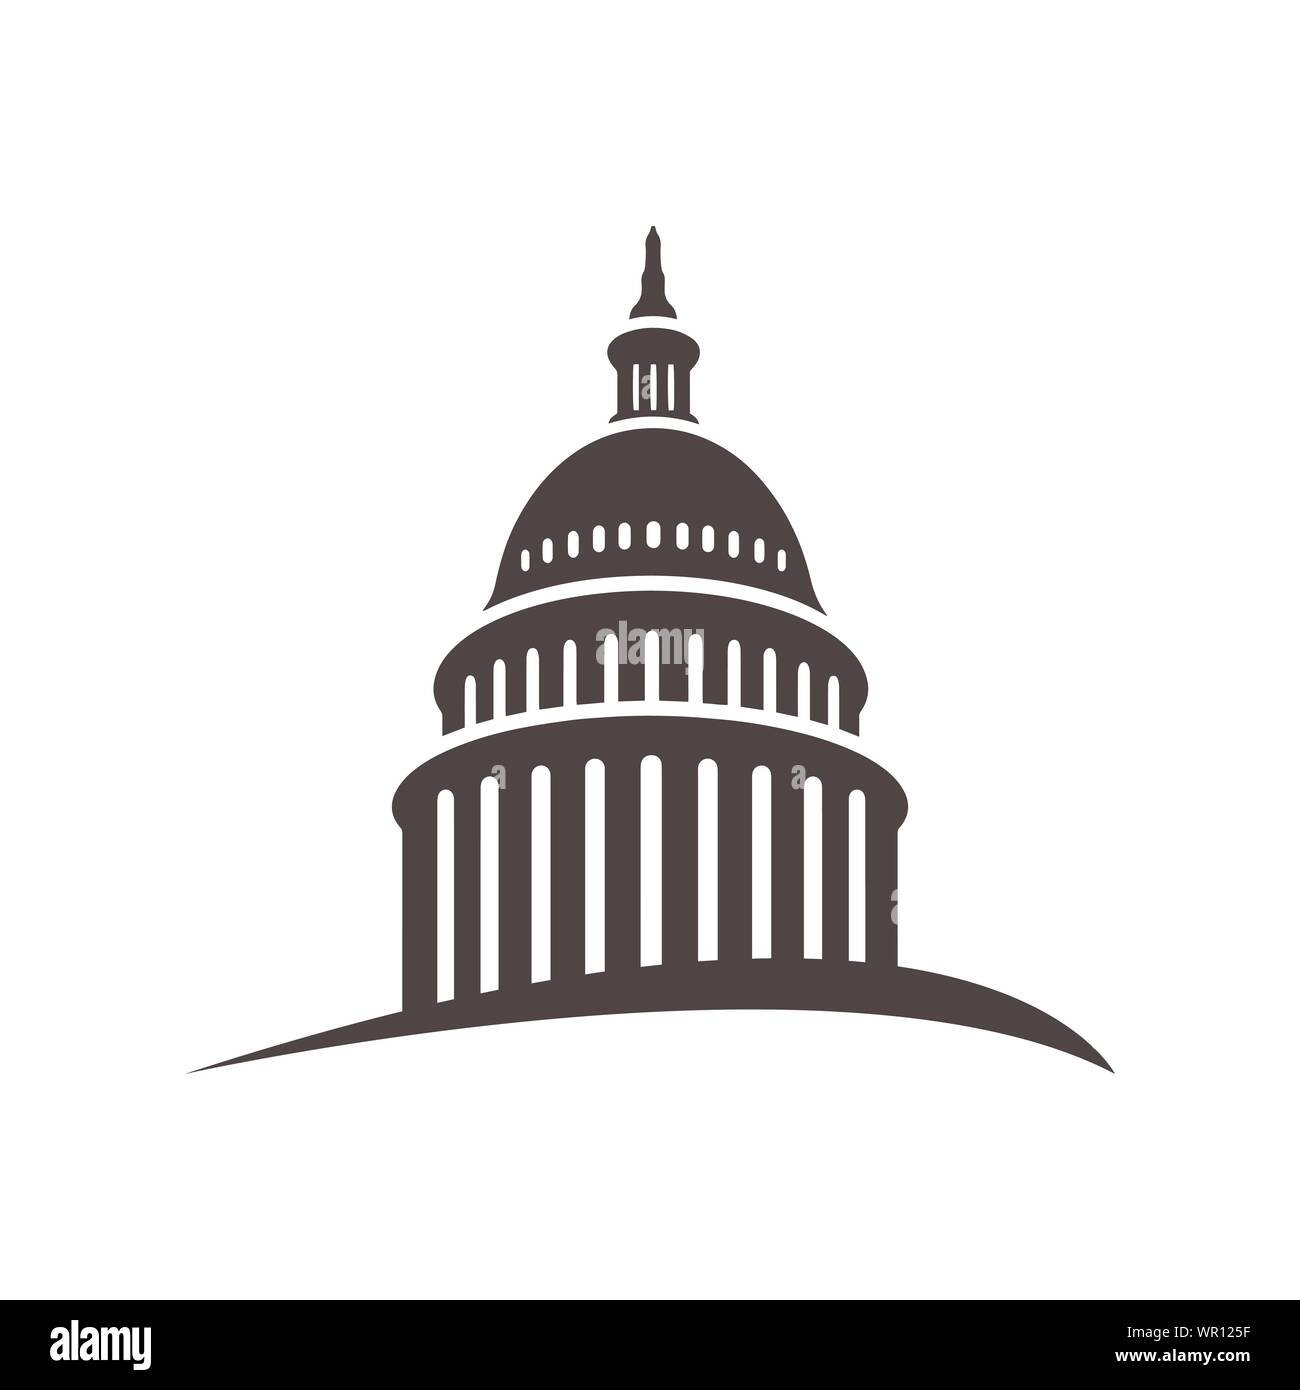 Creative Premium Landmark Capitol Building vettore logo design iconico illustrazioni Illustrazione Vettoriale